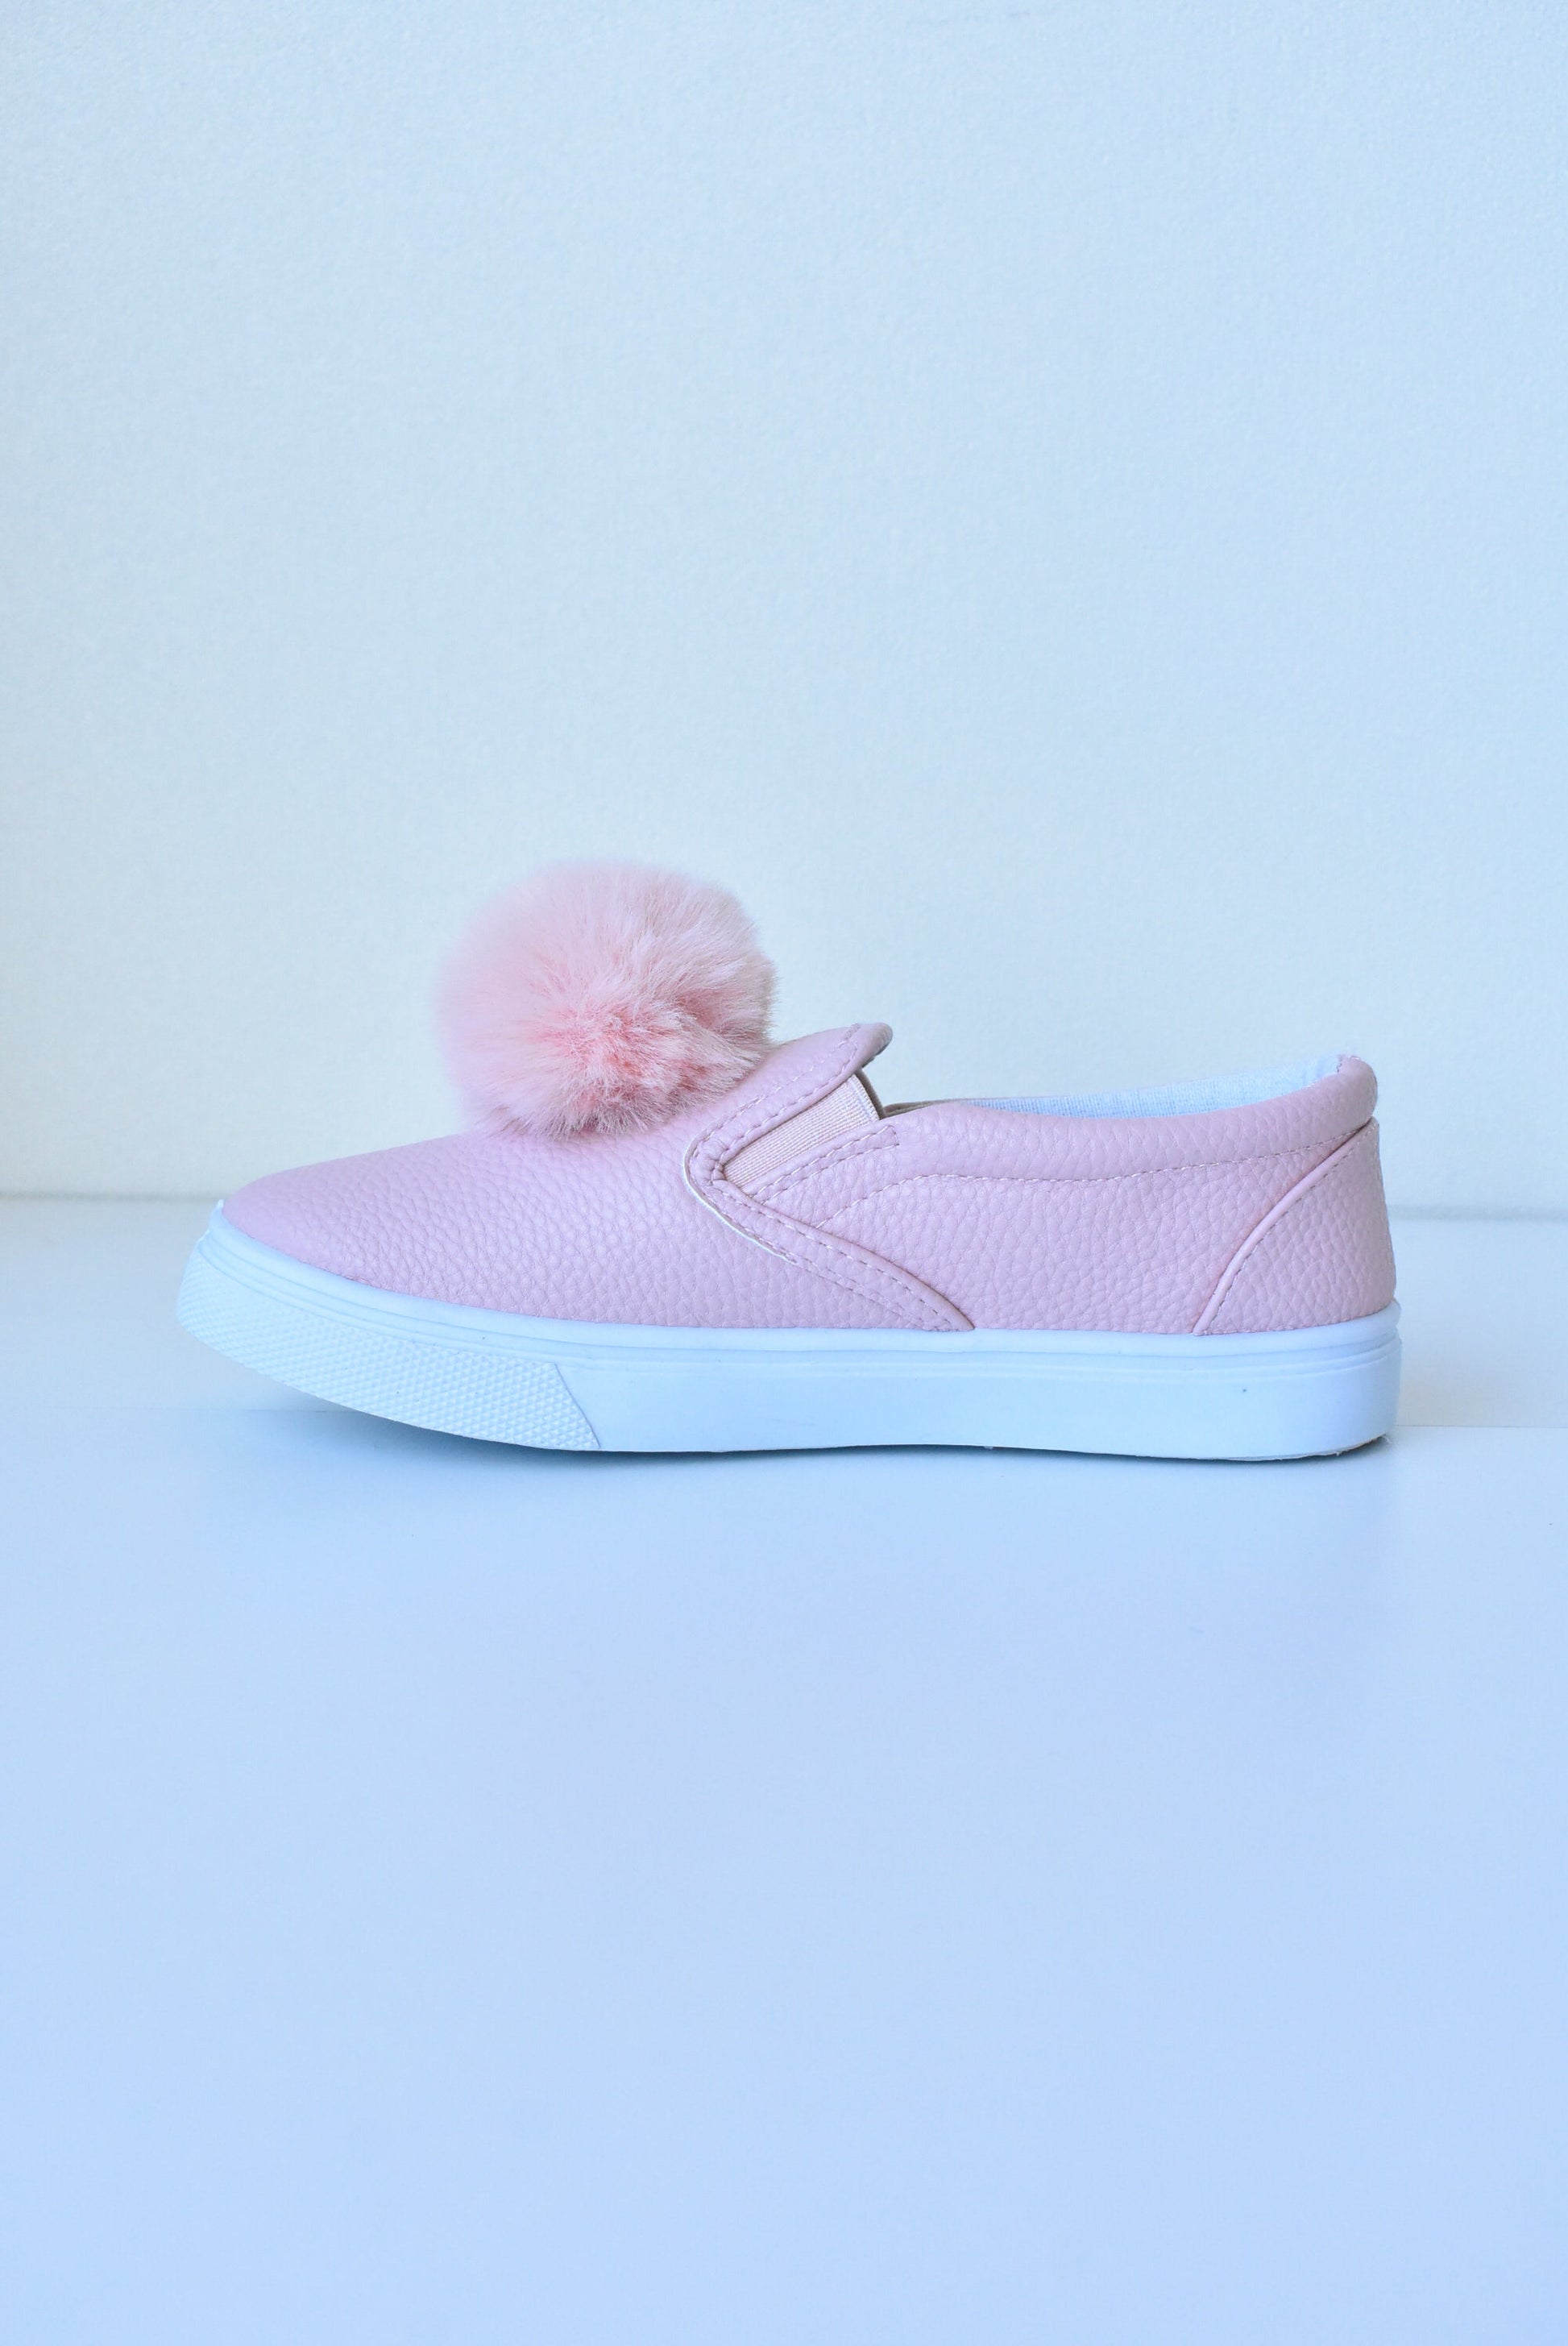 nå spontan Teoretisk Wildflower kids pink pom-pom shoes NEW, size 13 – Shop on Carroll Online